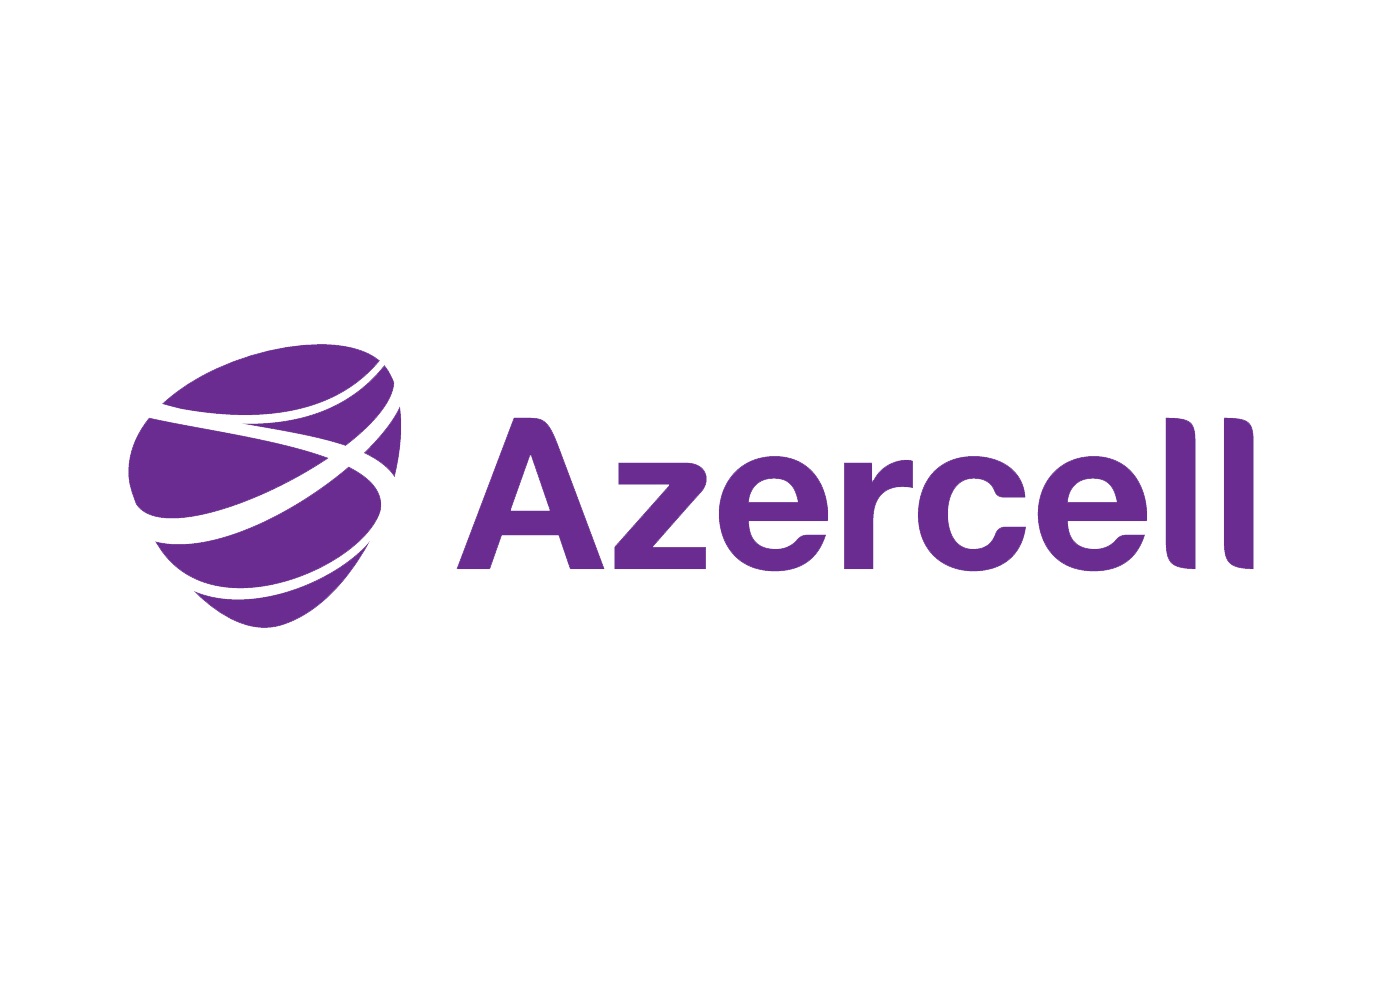 azercell logo 1